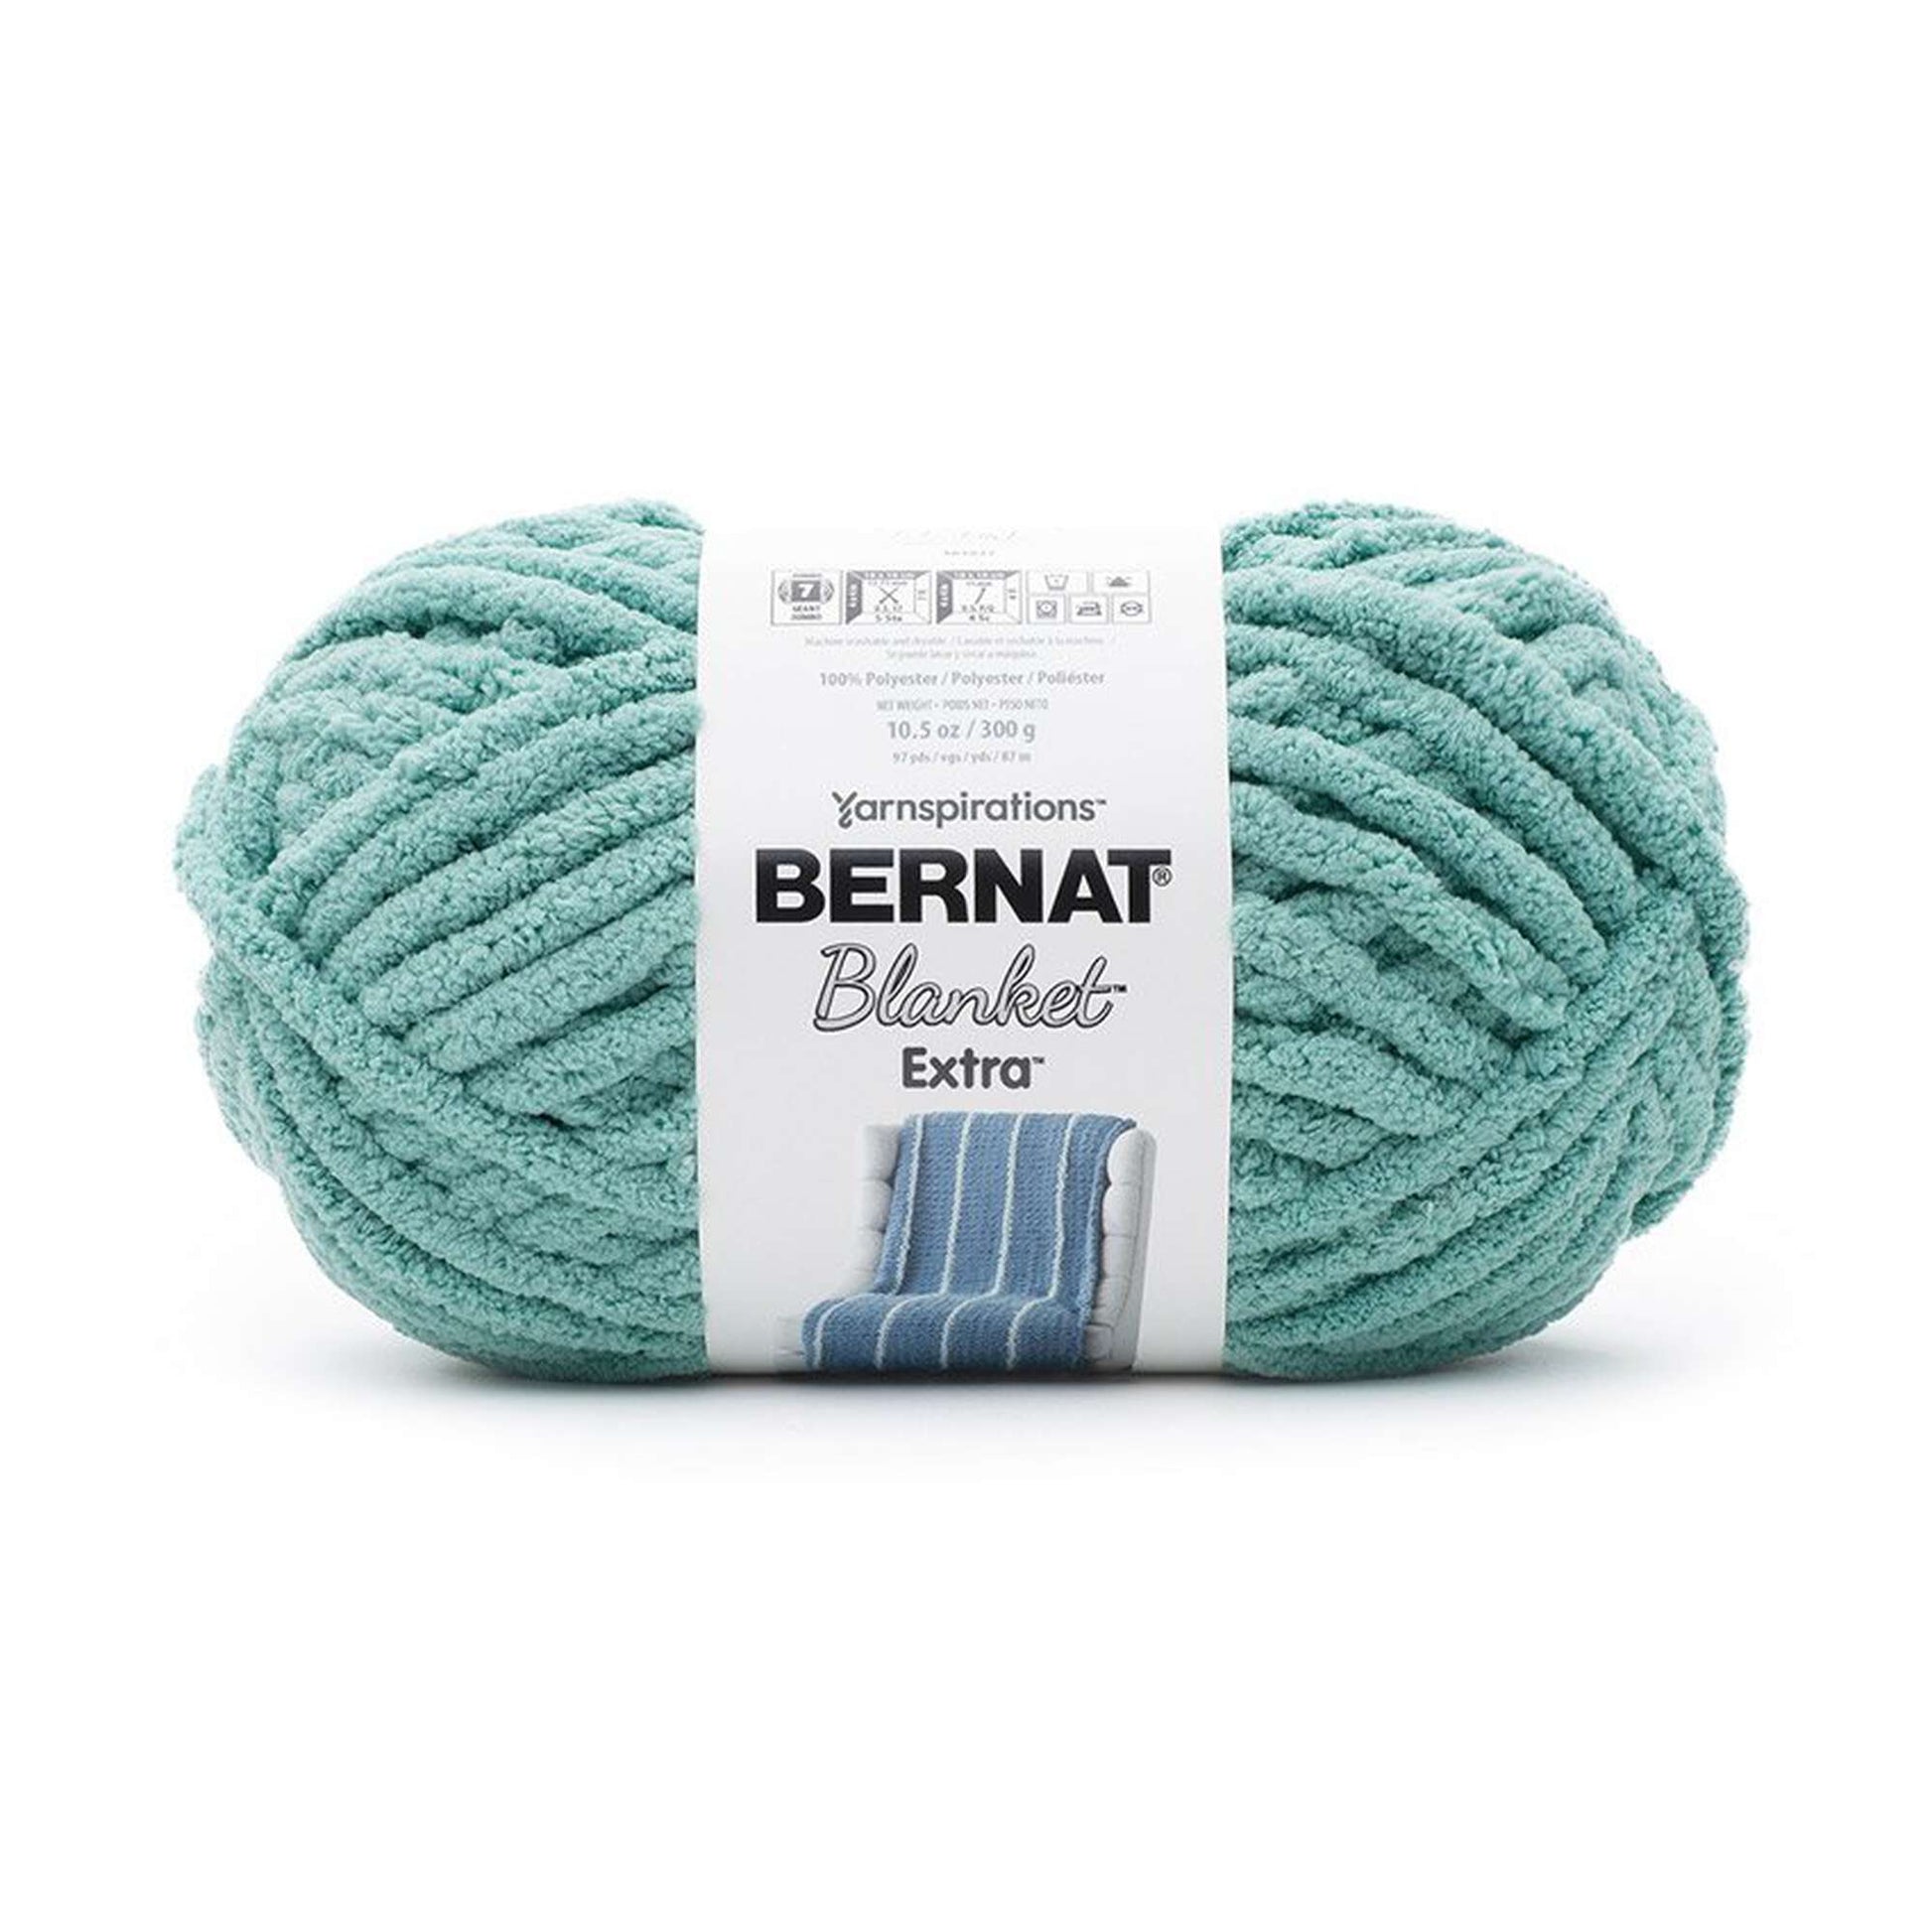 Bernat Blanket Extra Yarn (300g/10.5oz) - Clearance Shades* Light Teal